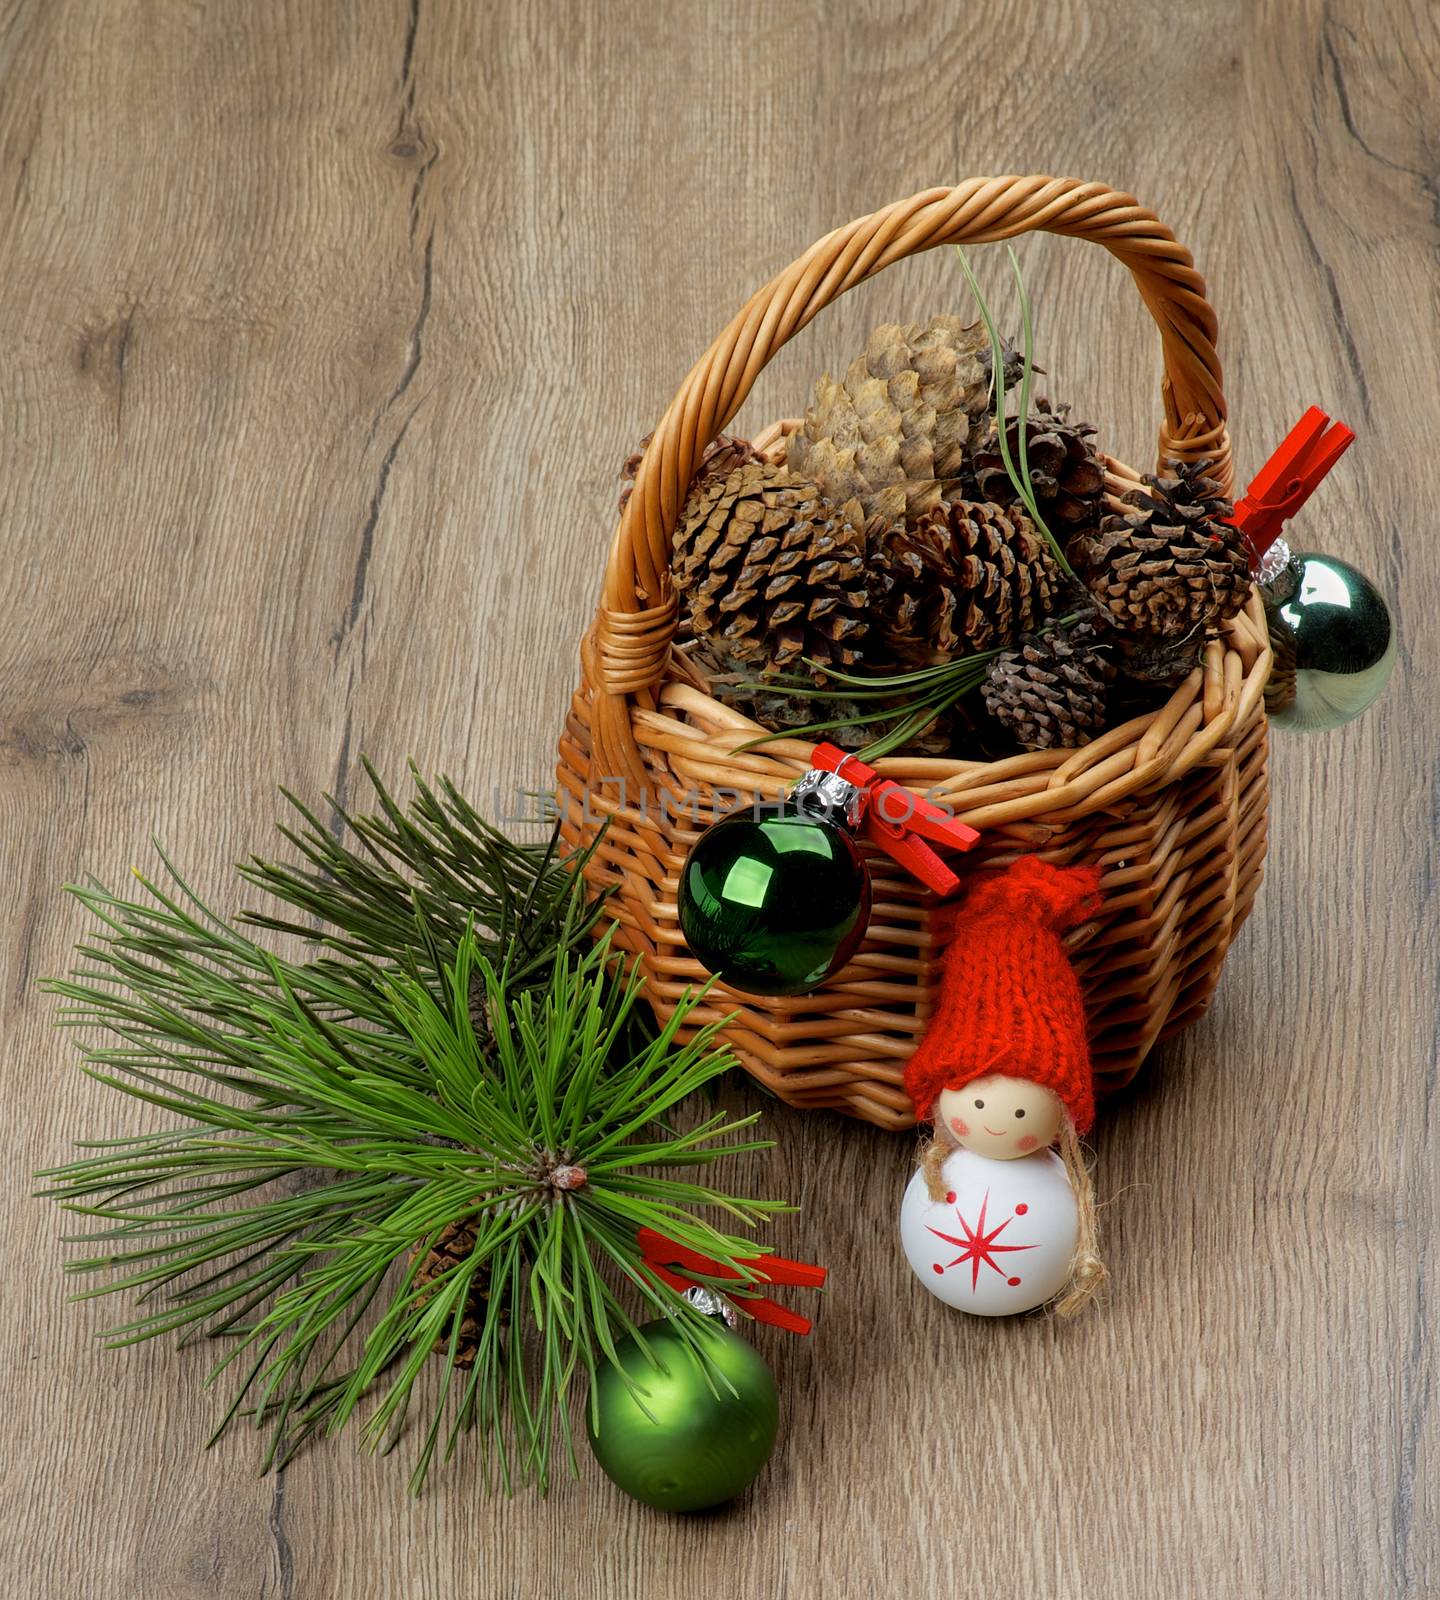 Christmas Decorations by zhekos